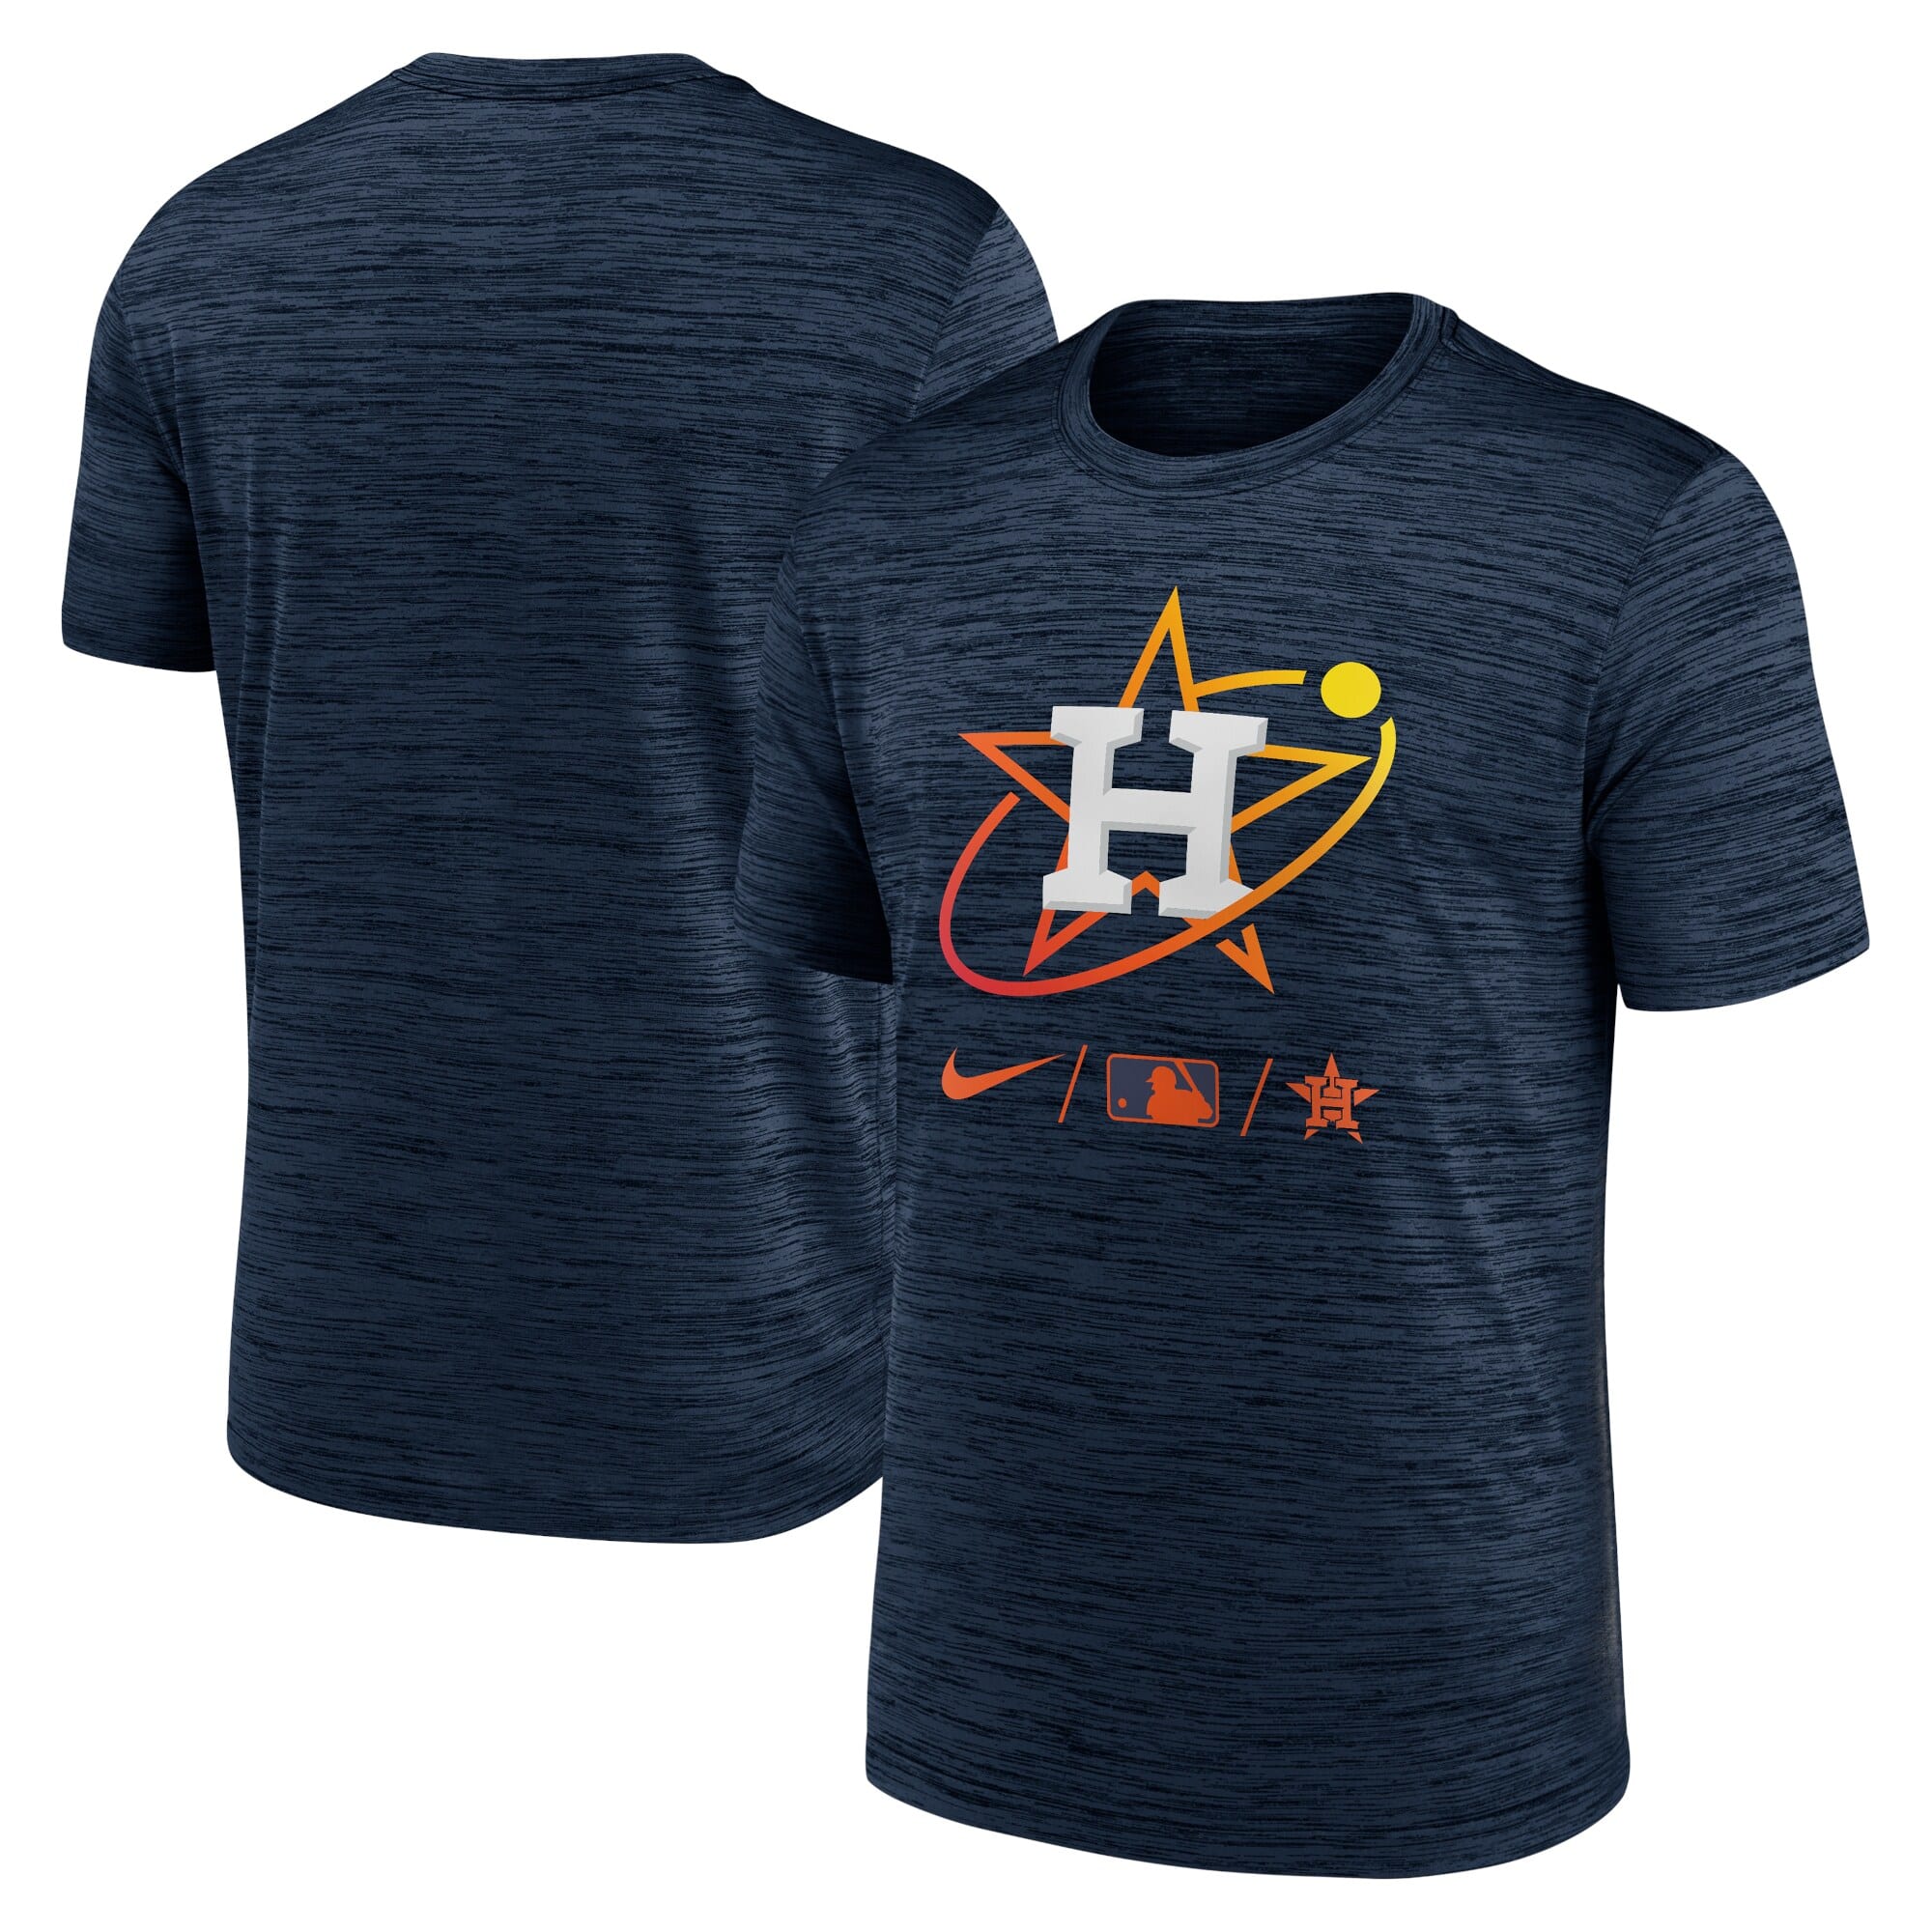 Houston Astros City Connect performance shirt